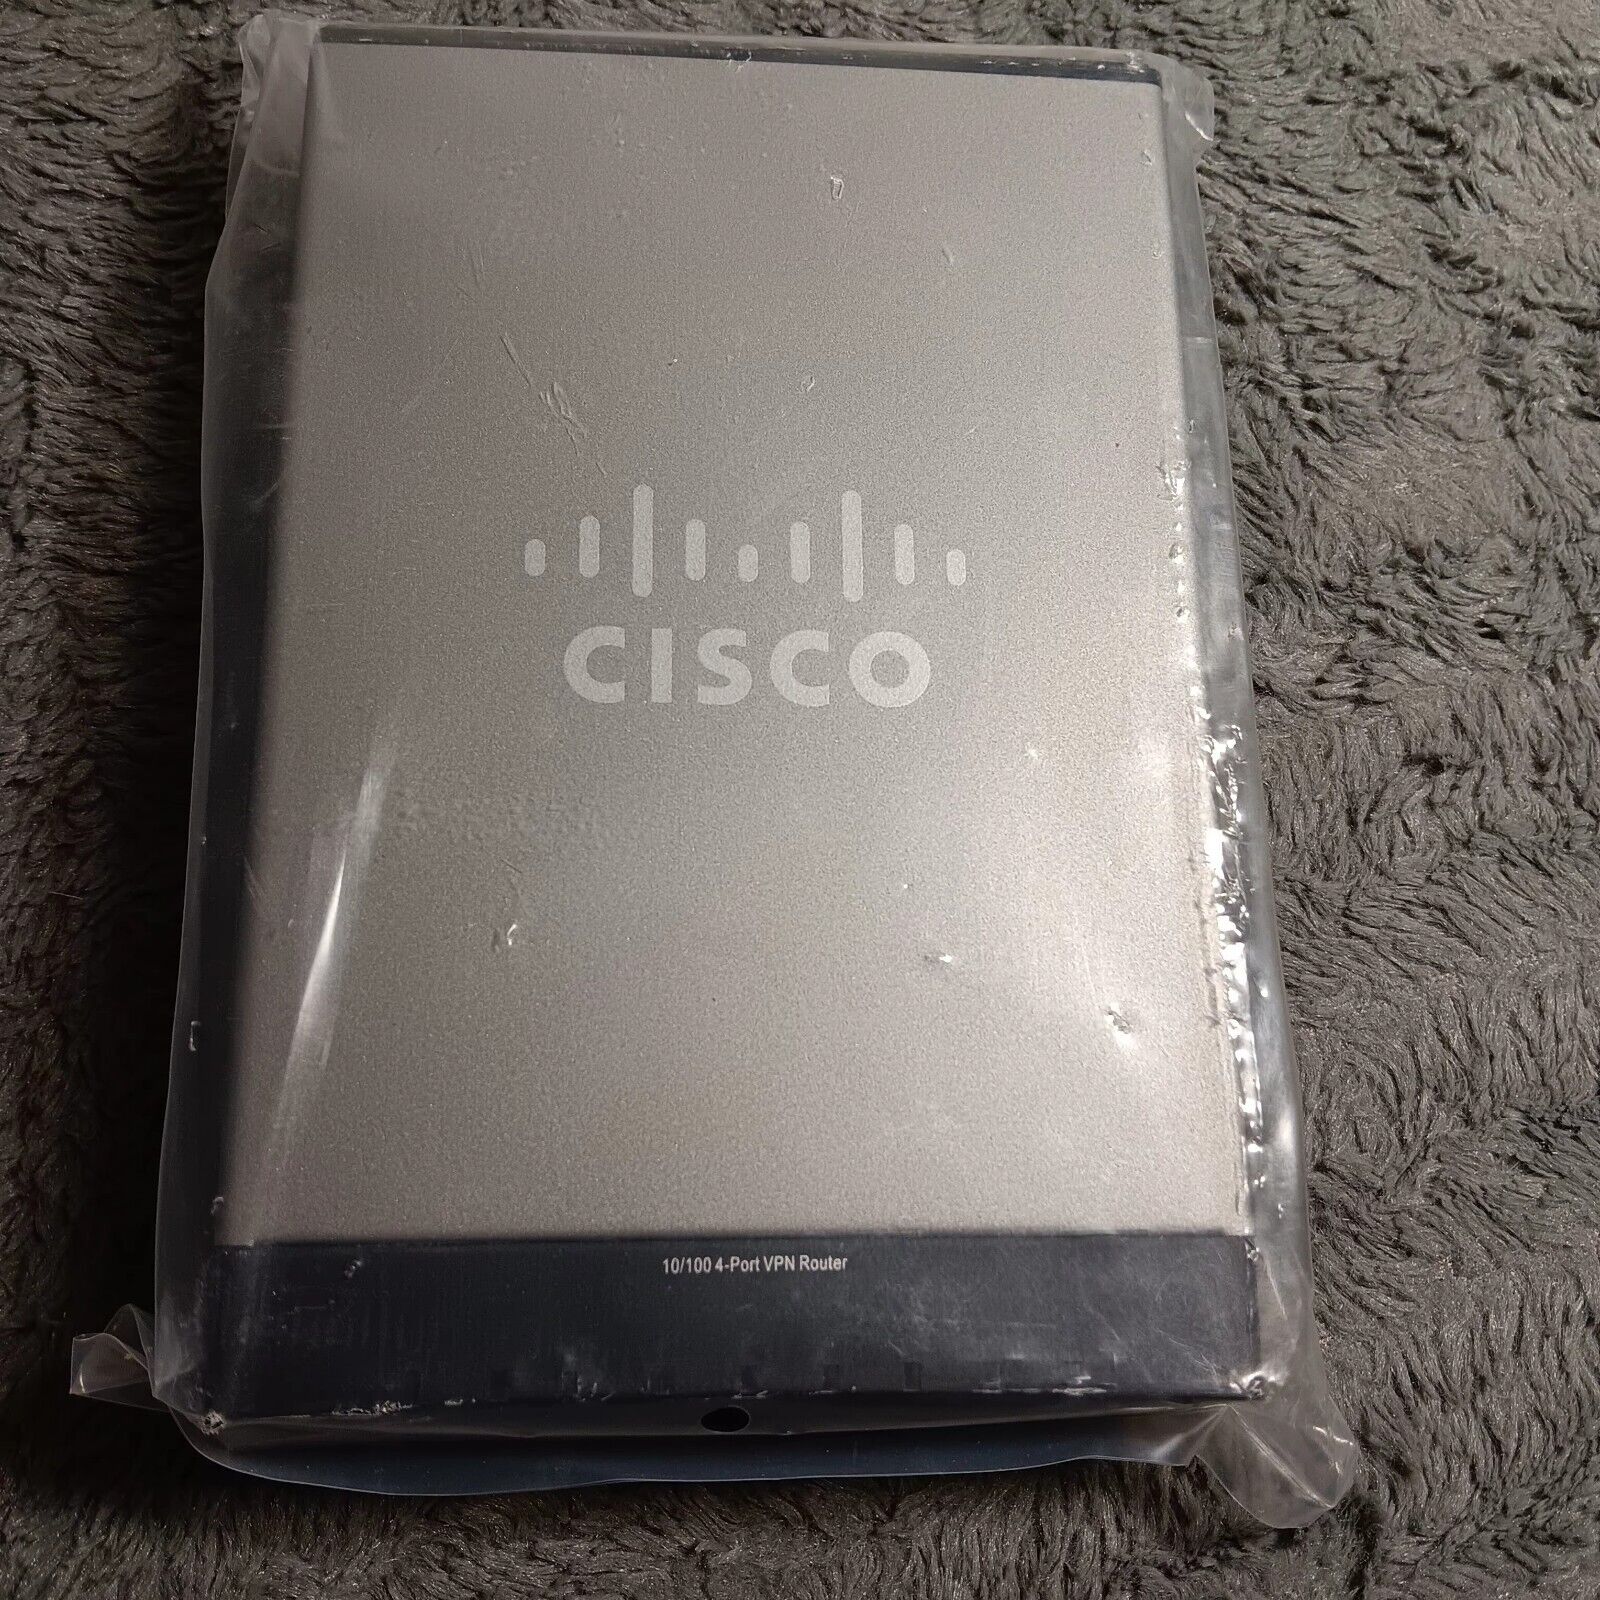 Cisco RV042 4-Port 10/100 Wired Router